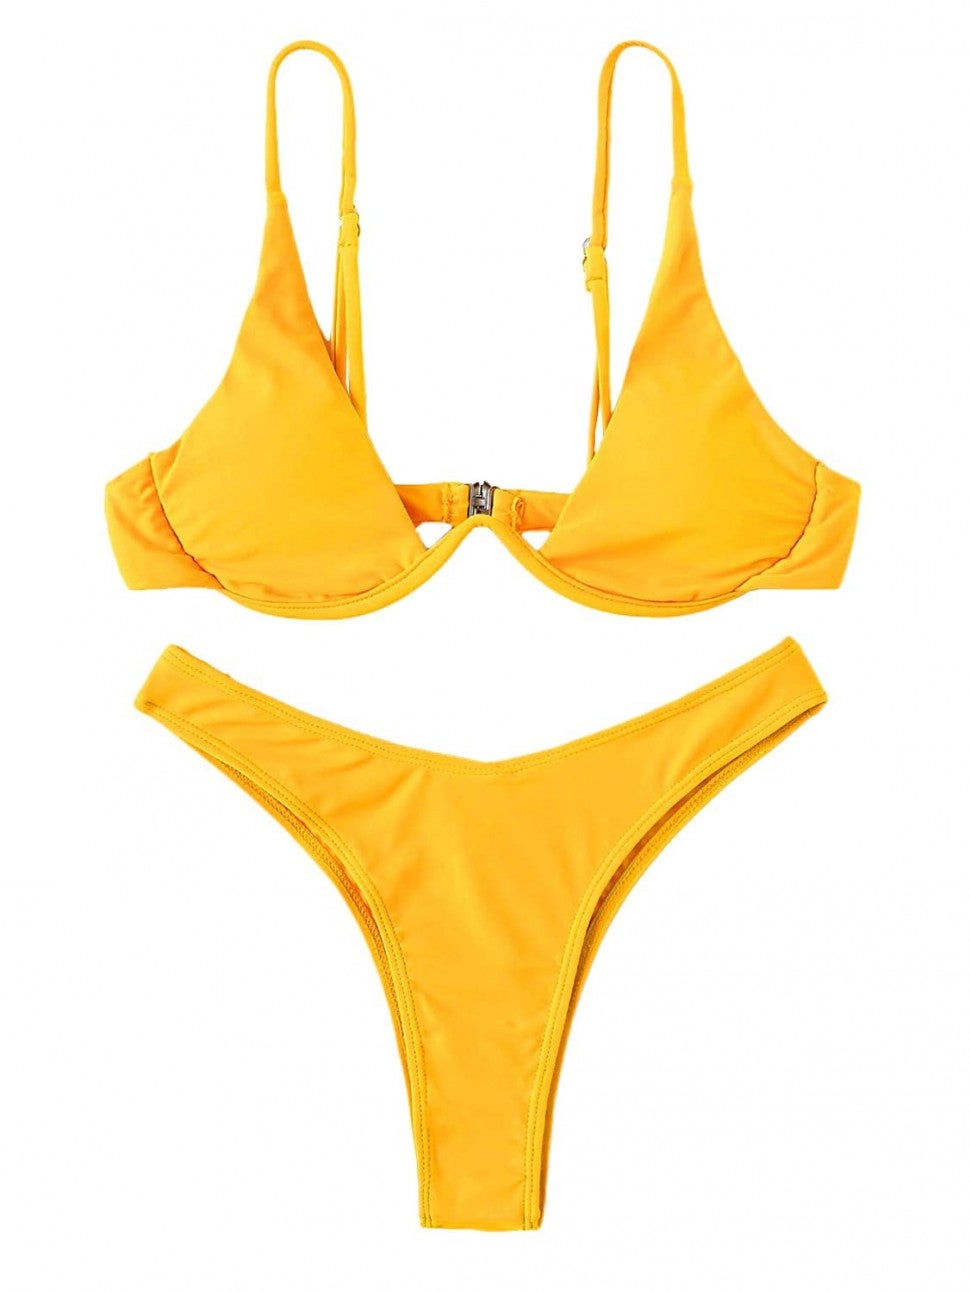 Verdusa Amazon yellow underwire bikini